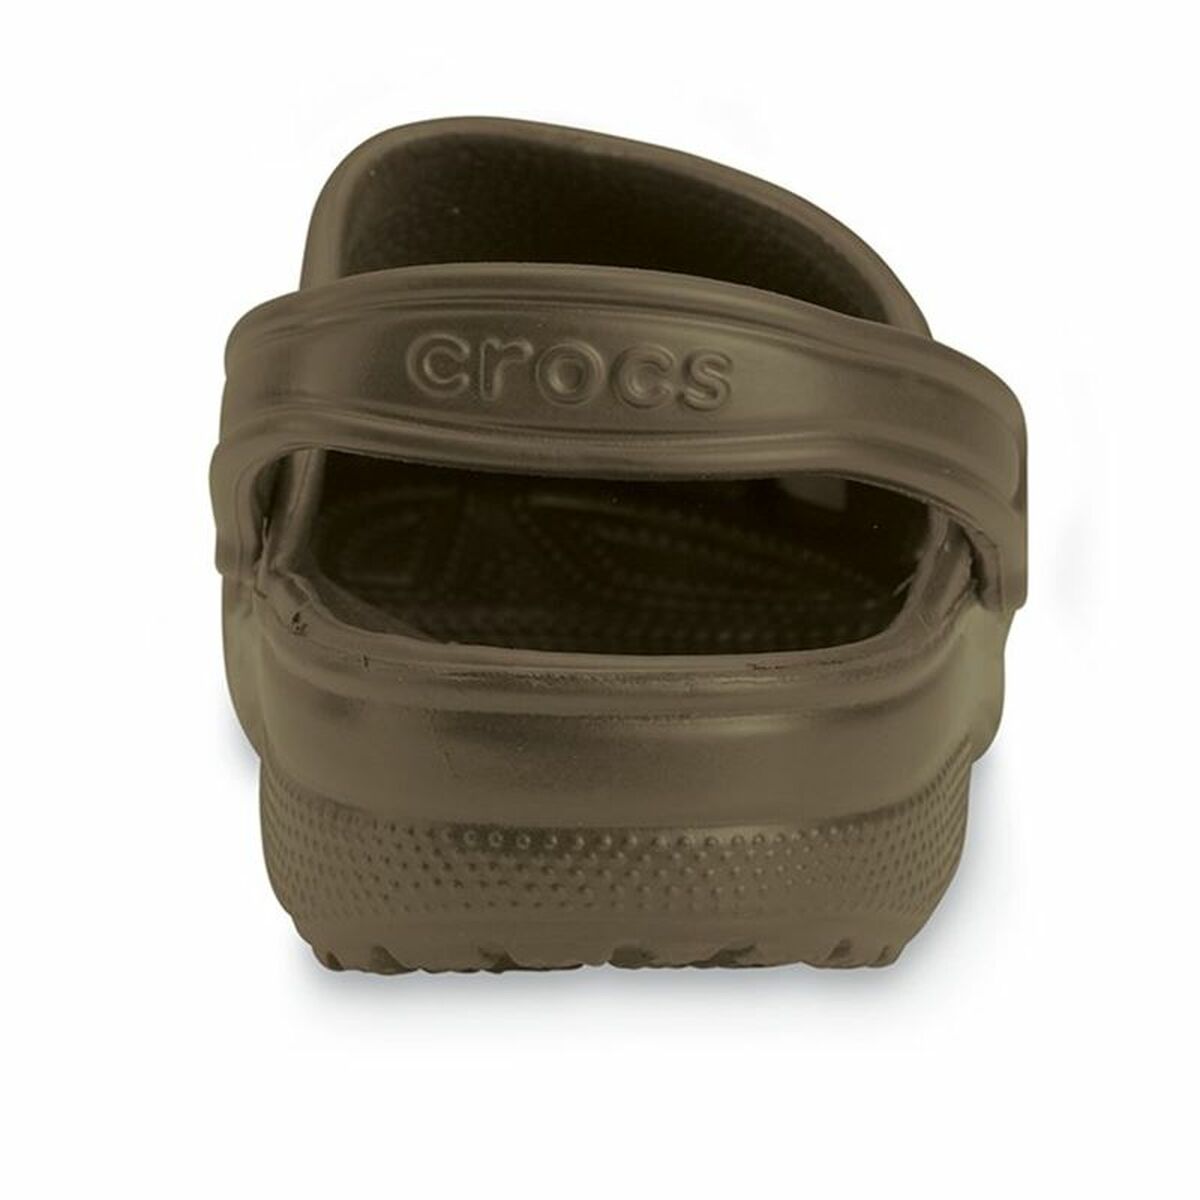 Clogs Crocs Classic Brown